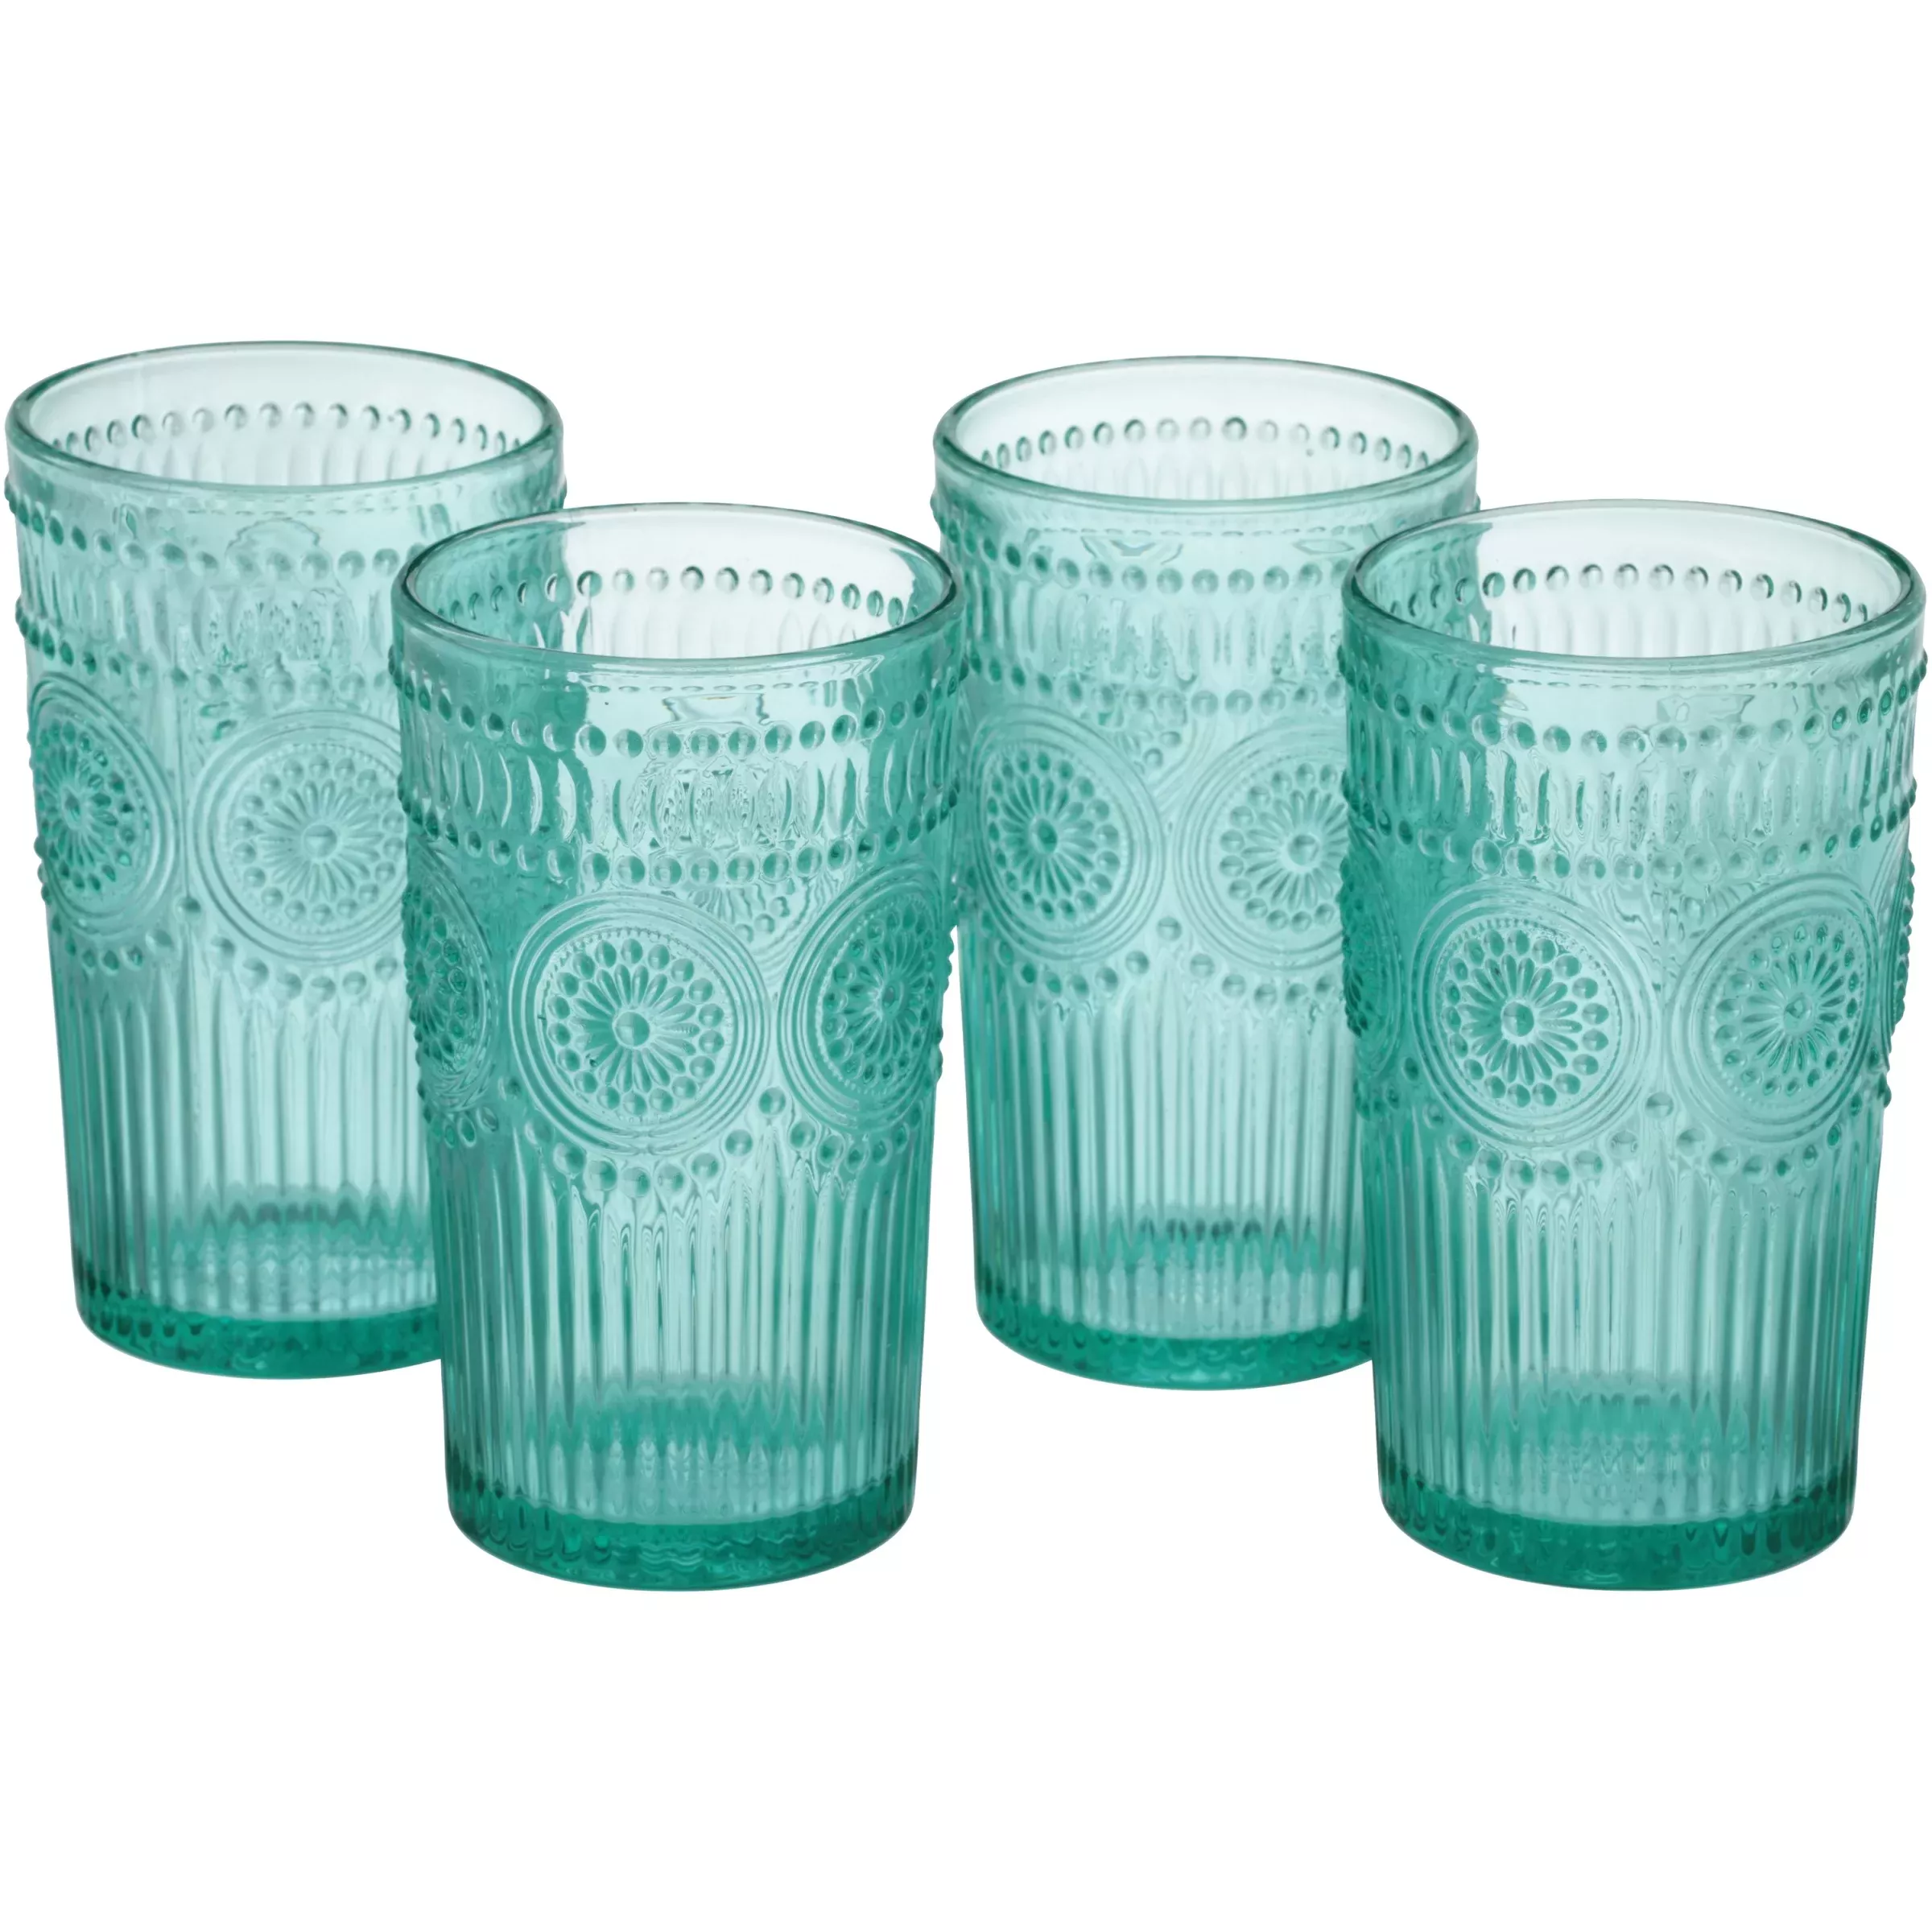 Better Homes & Gardens Hollis Drinking Glasses, 14.4 oz, Set of 8 